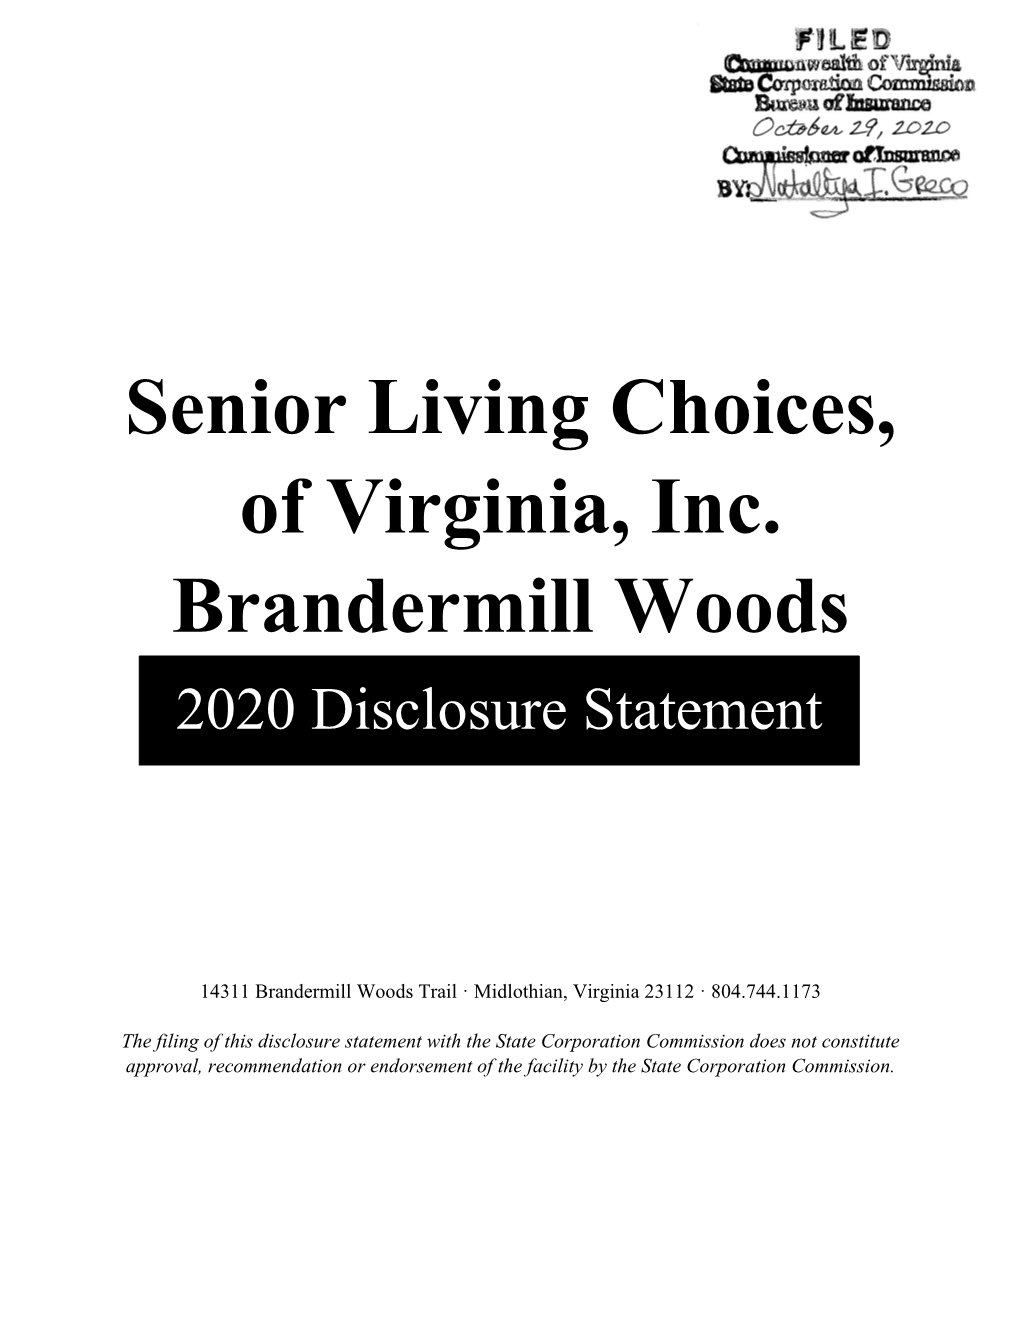 Senior Living Choices of Virginia Brandermill Woods, Inc